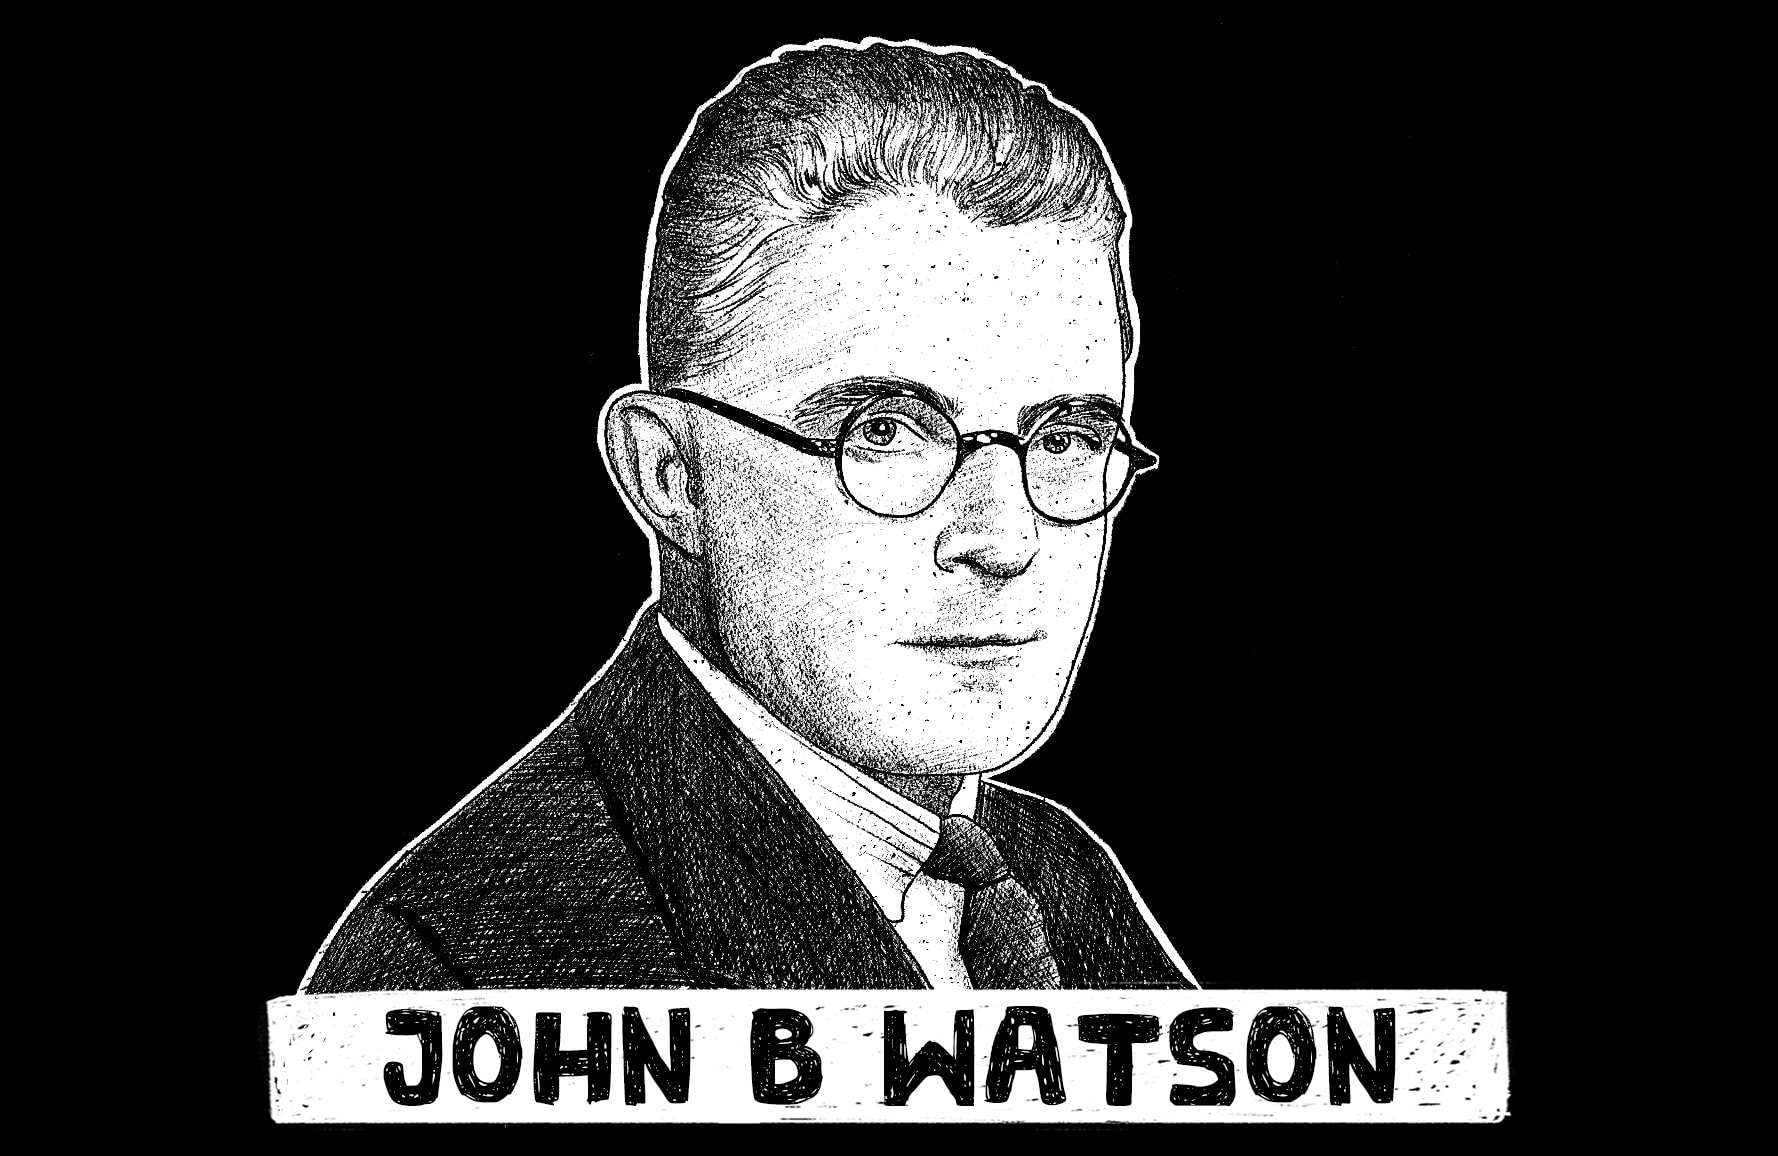 John B Watson